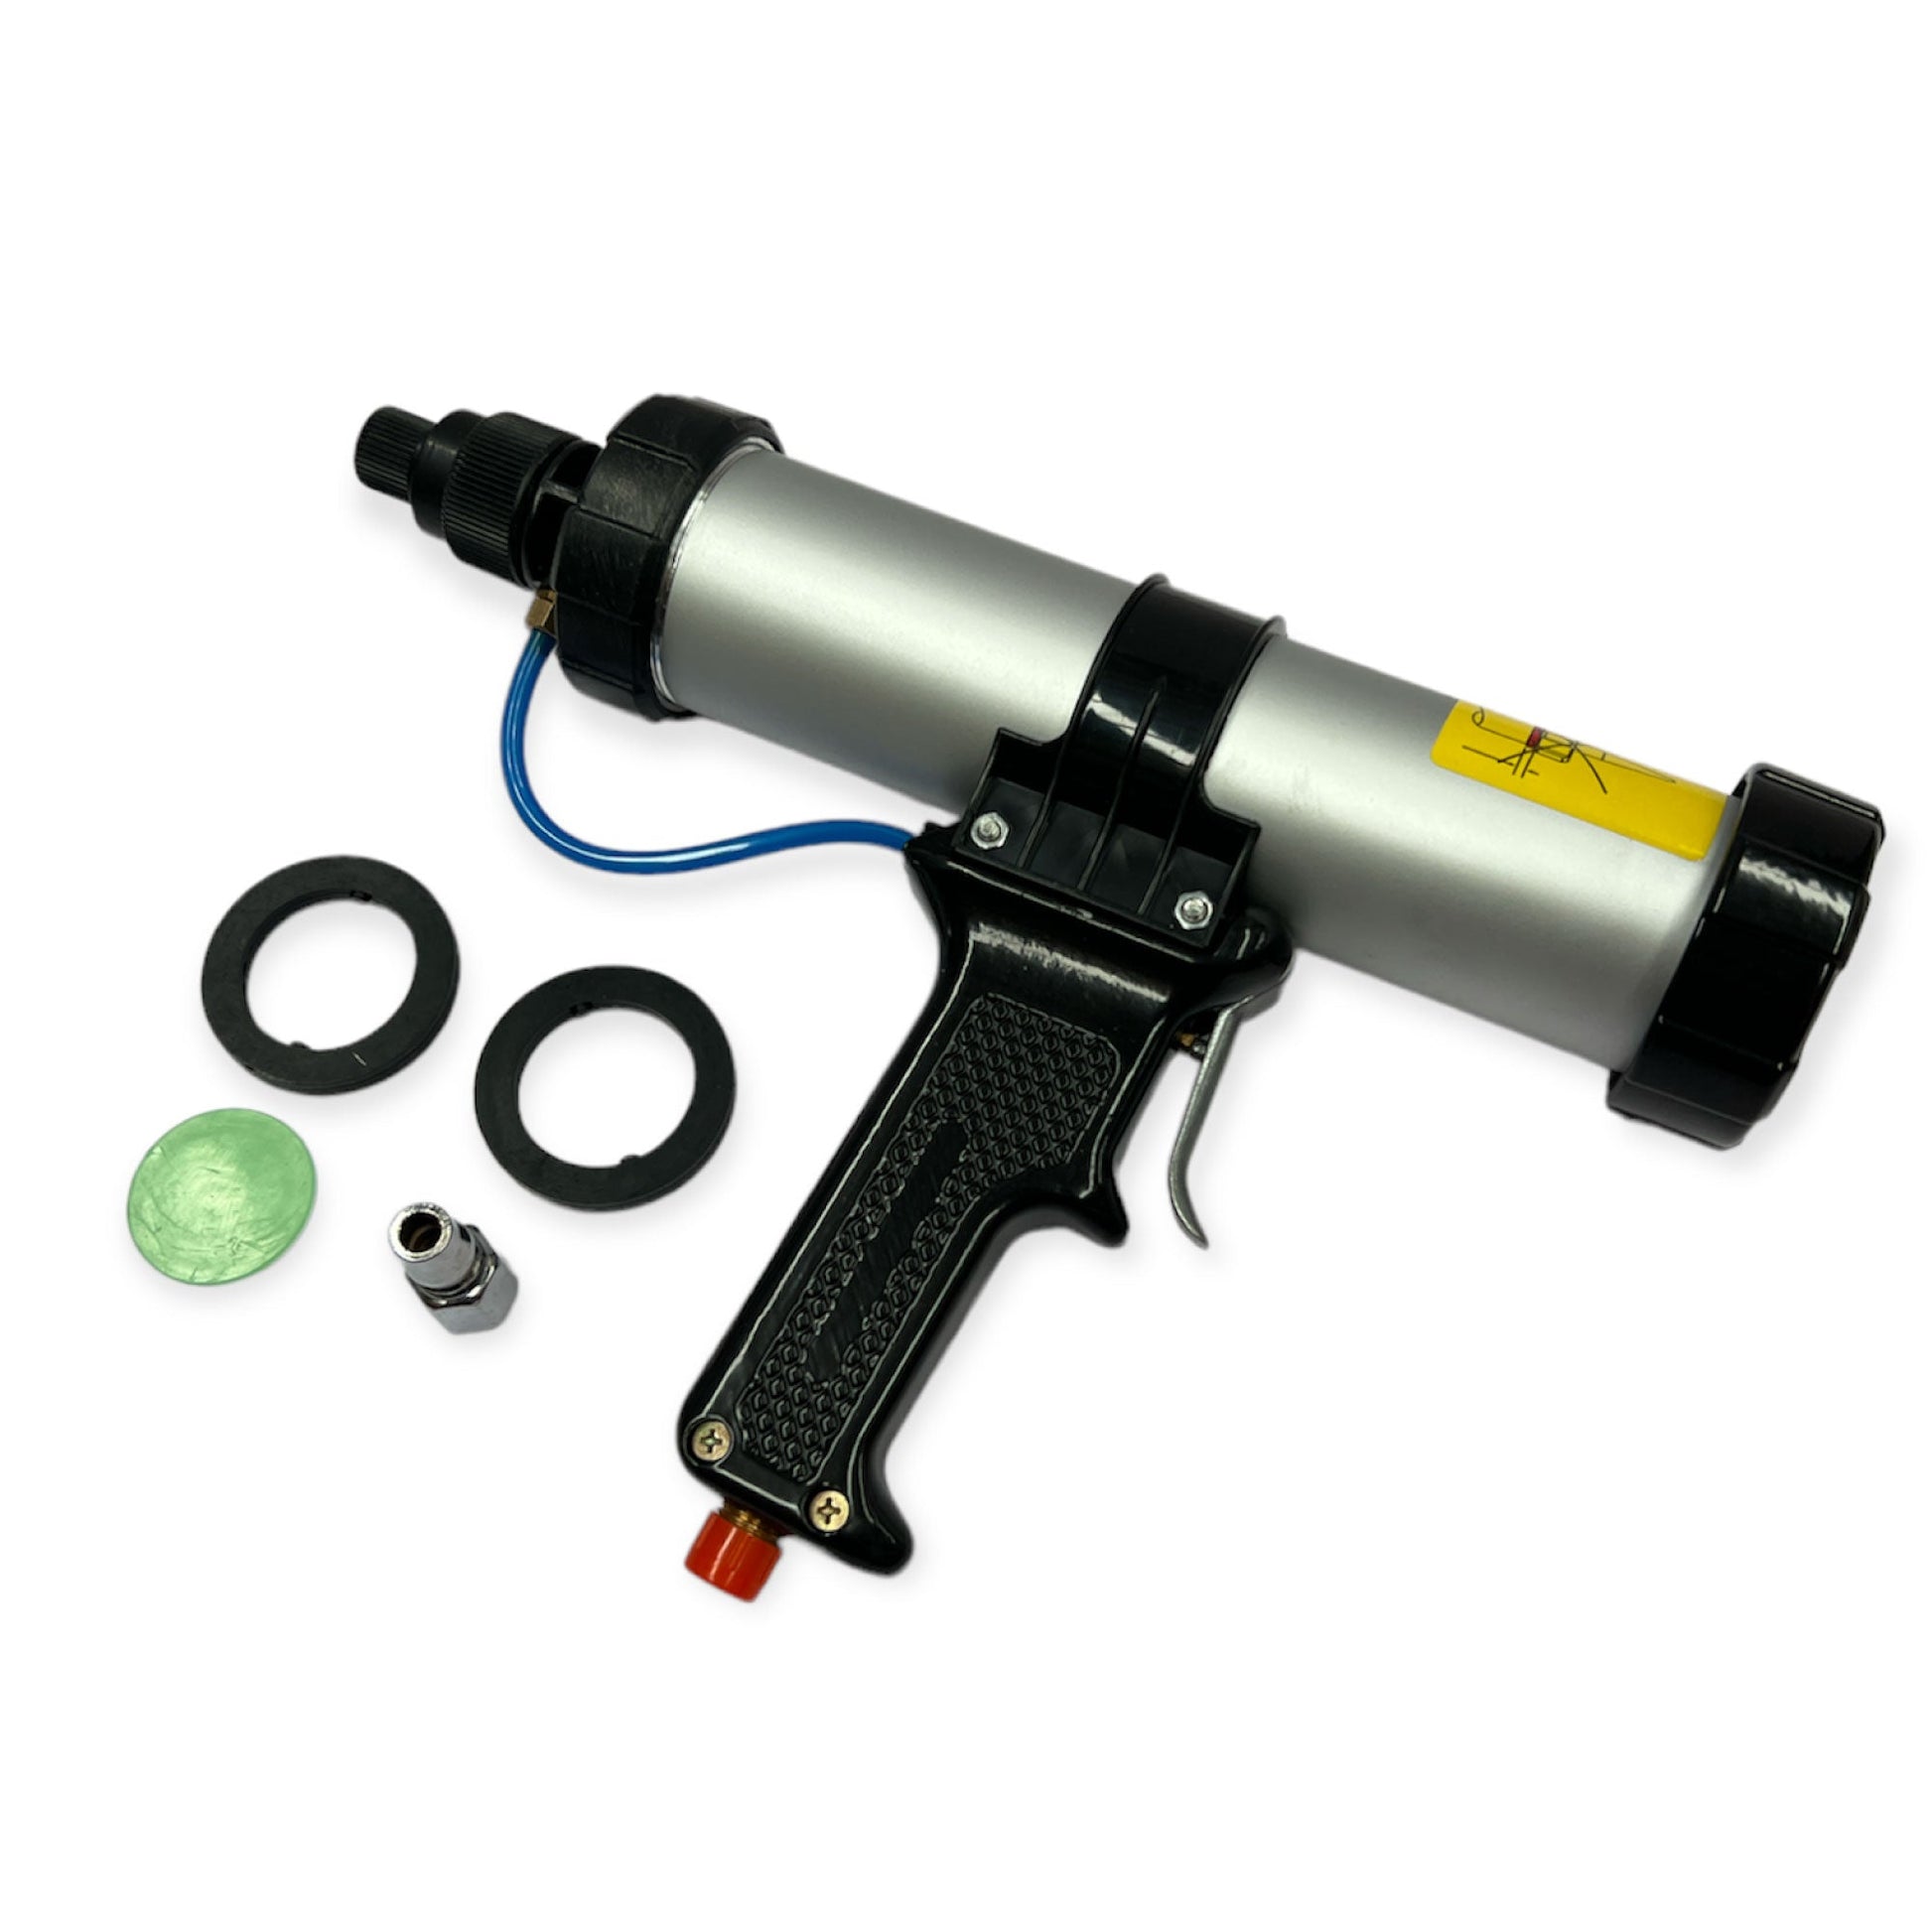 Pneumatic Sealant Gun - Air Caulking Applicator Sausage Cartridge Cordless Tool